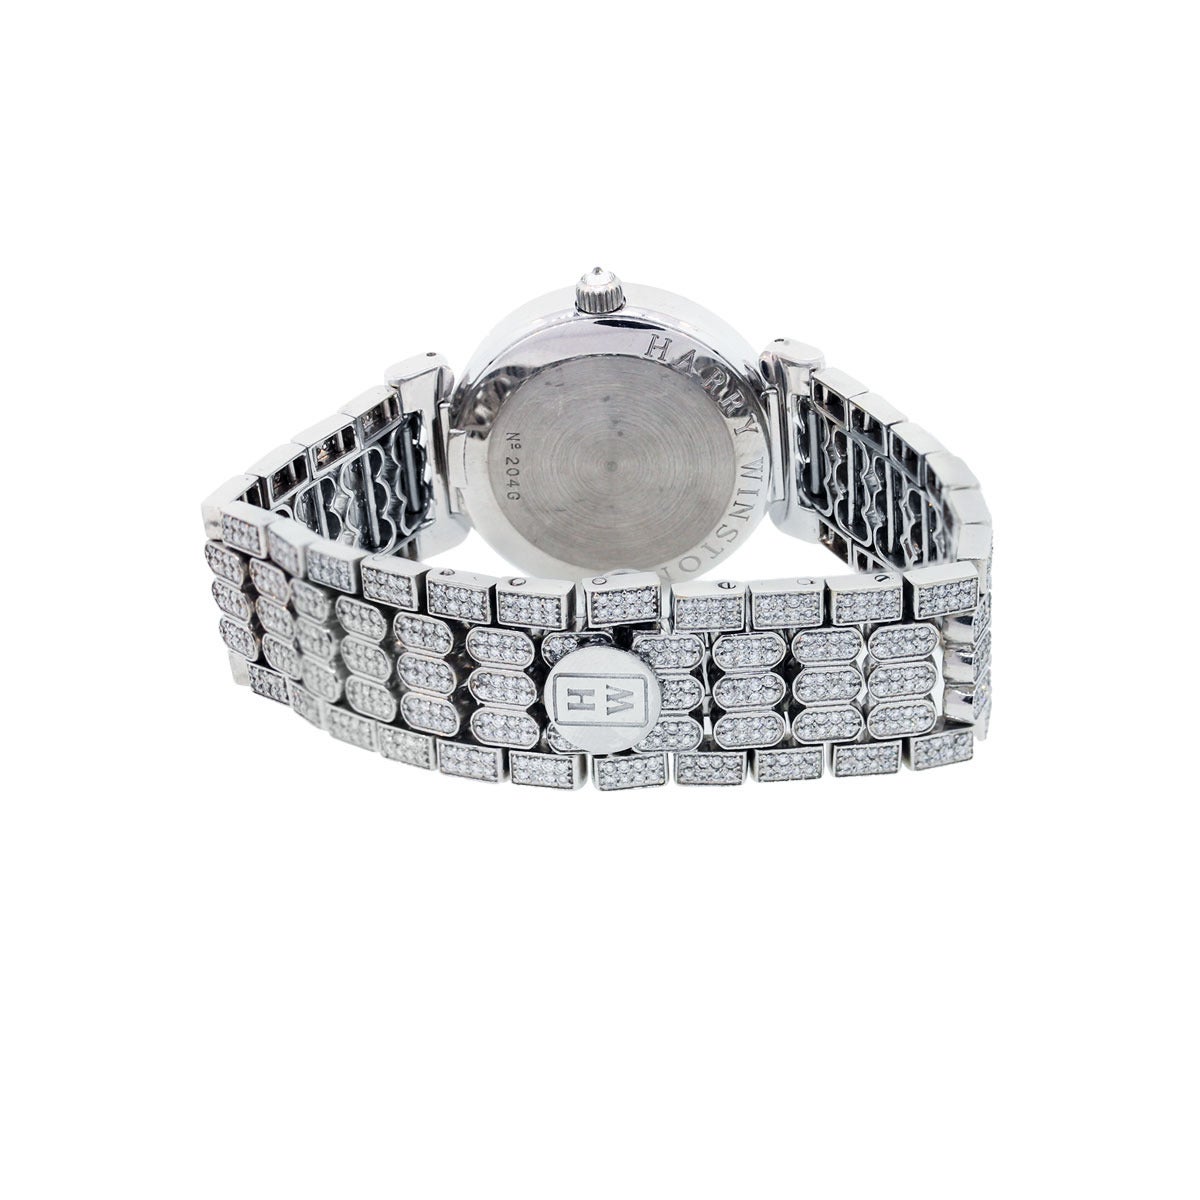 Women's Harry Winston Lady's White Gold Diamond Premier Grill Automatic Wristwatch